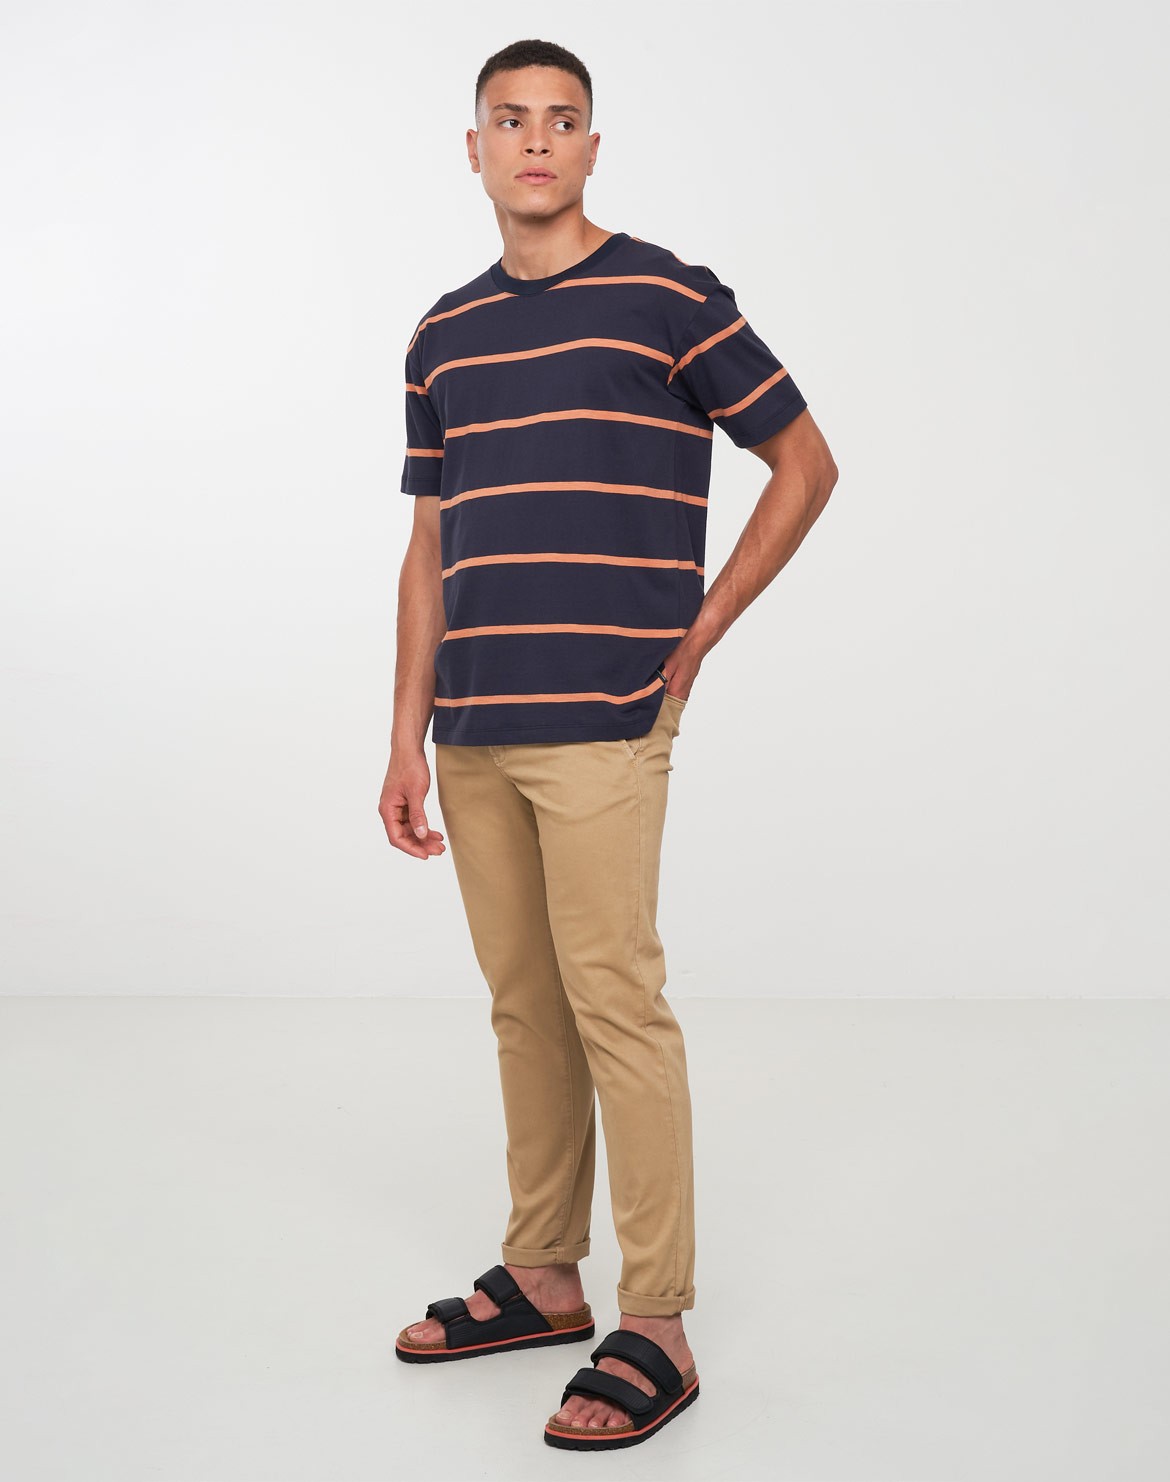 Rowan Stripes T-Shirt